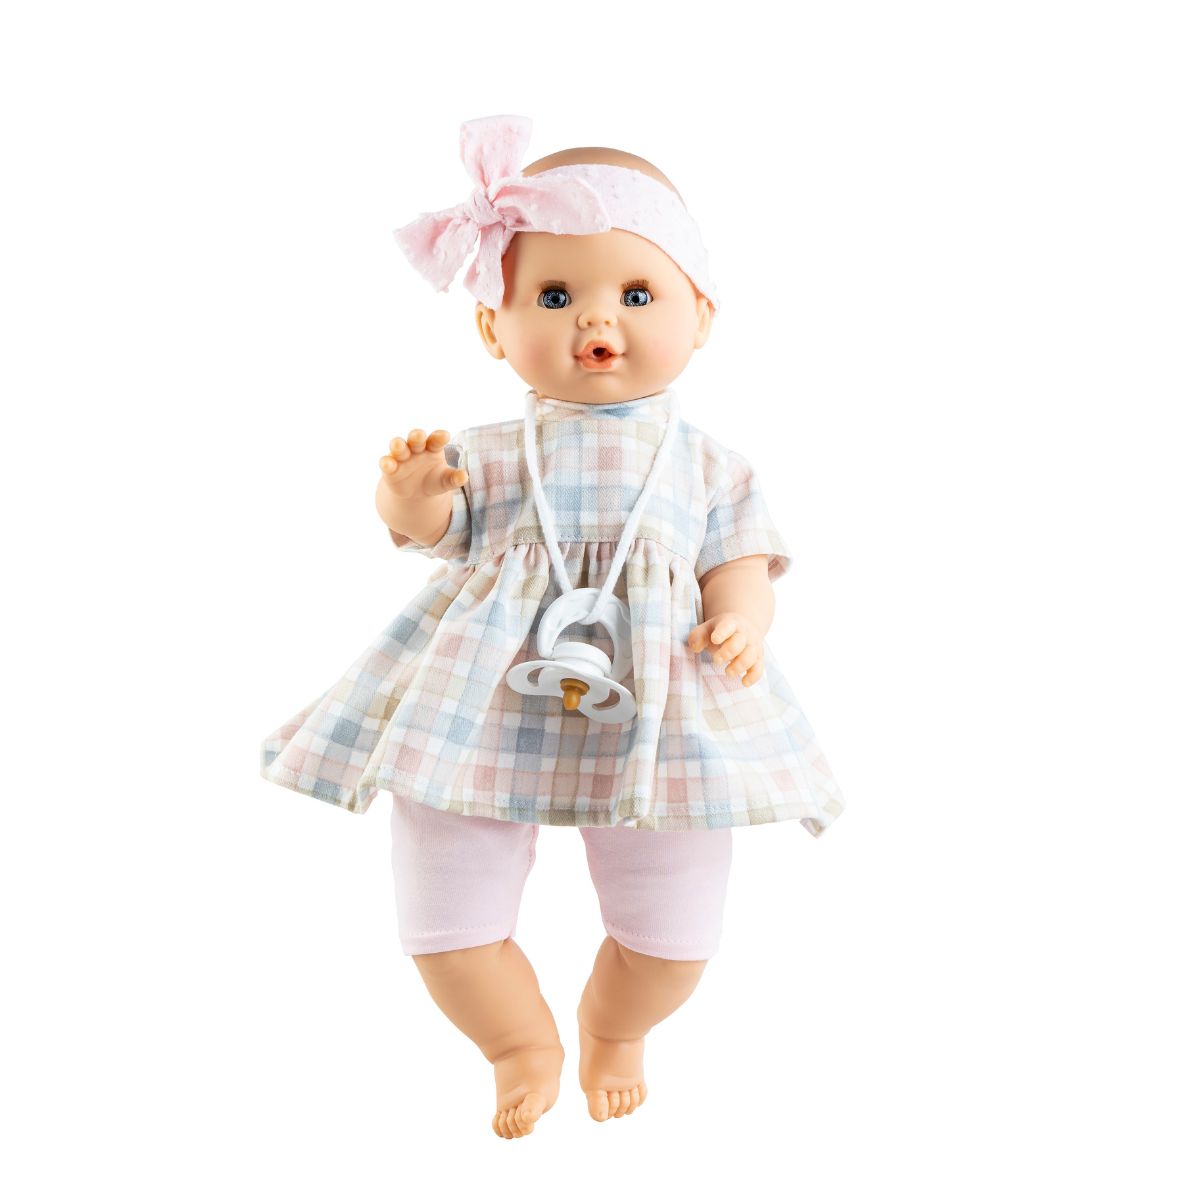 Spanish doll Bobas Paola Reina 08035